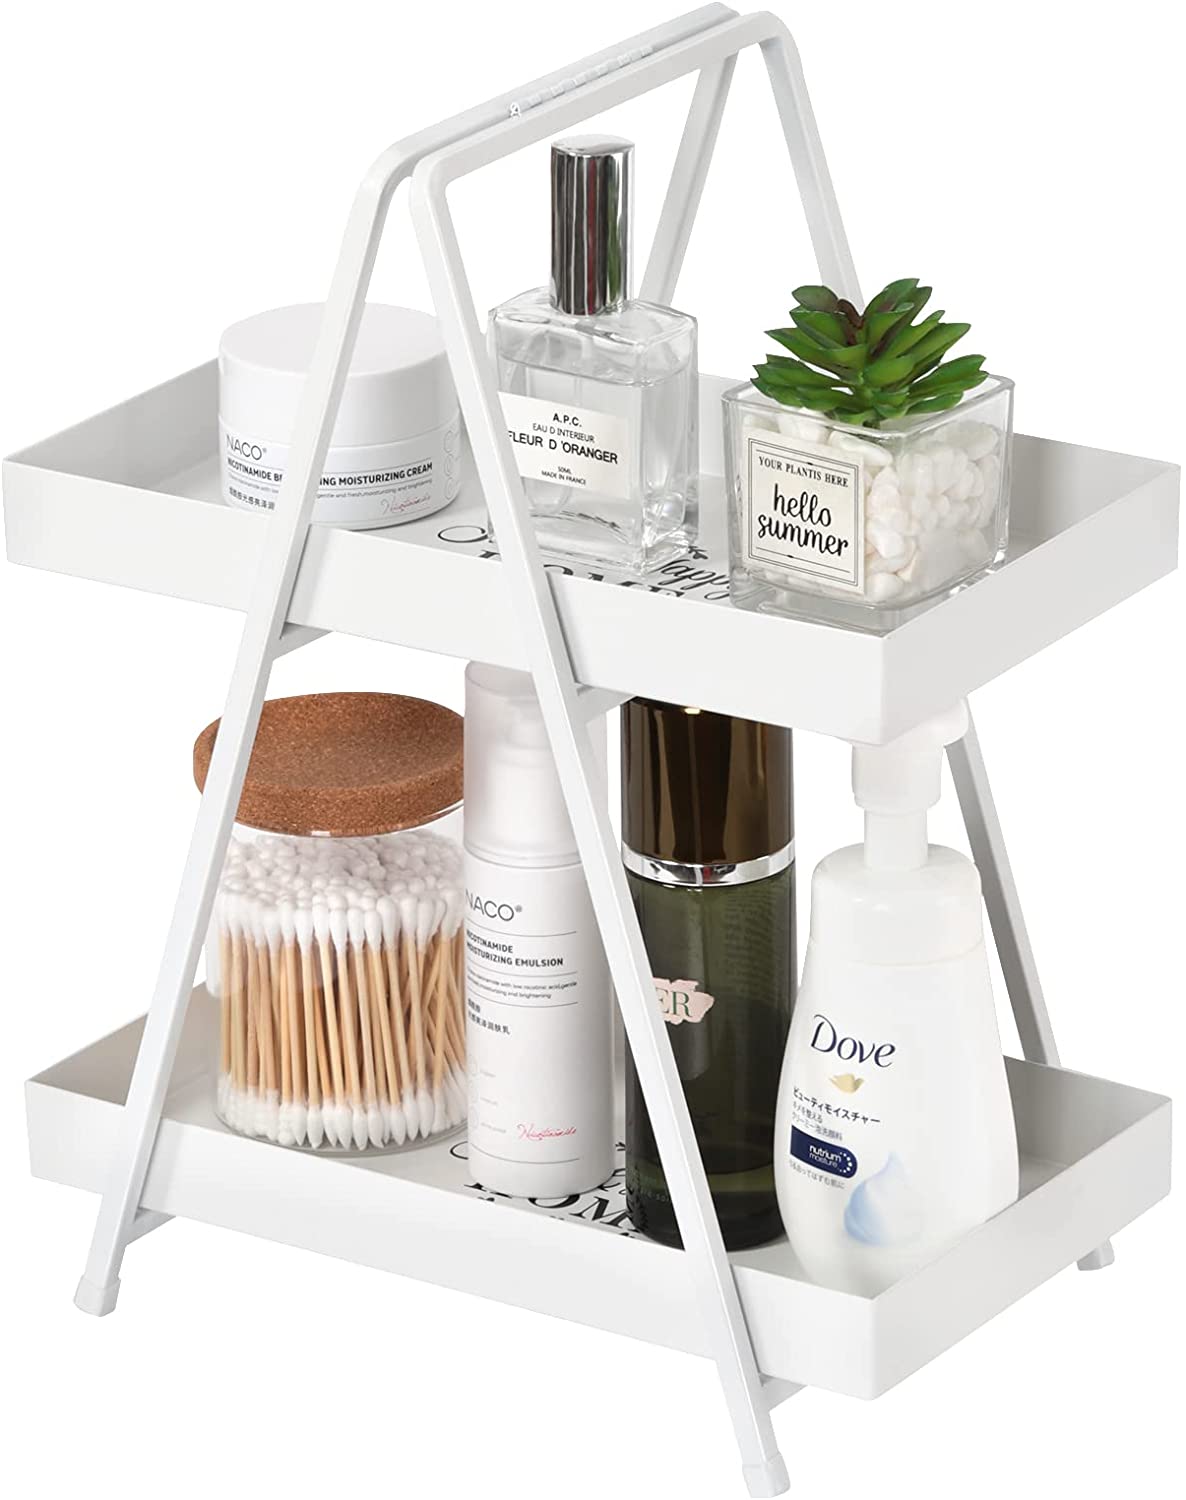 Luxspire 2-Tier Countertop Organizer for Bathroom Counter Shelf Serving Tray, Cosmetic Perfume Storage Rack Kitchen Spice Rack Bathroom Accessories